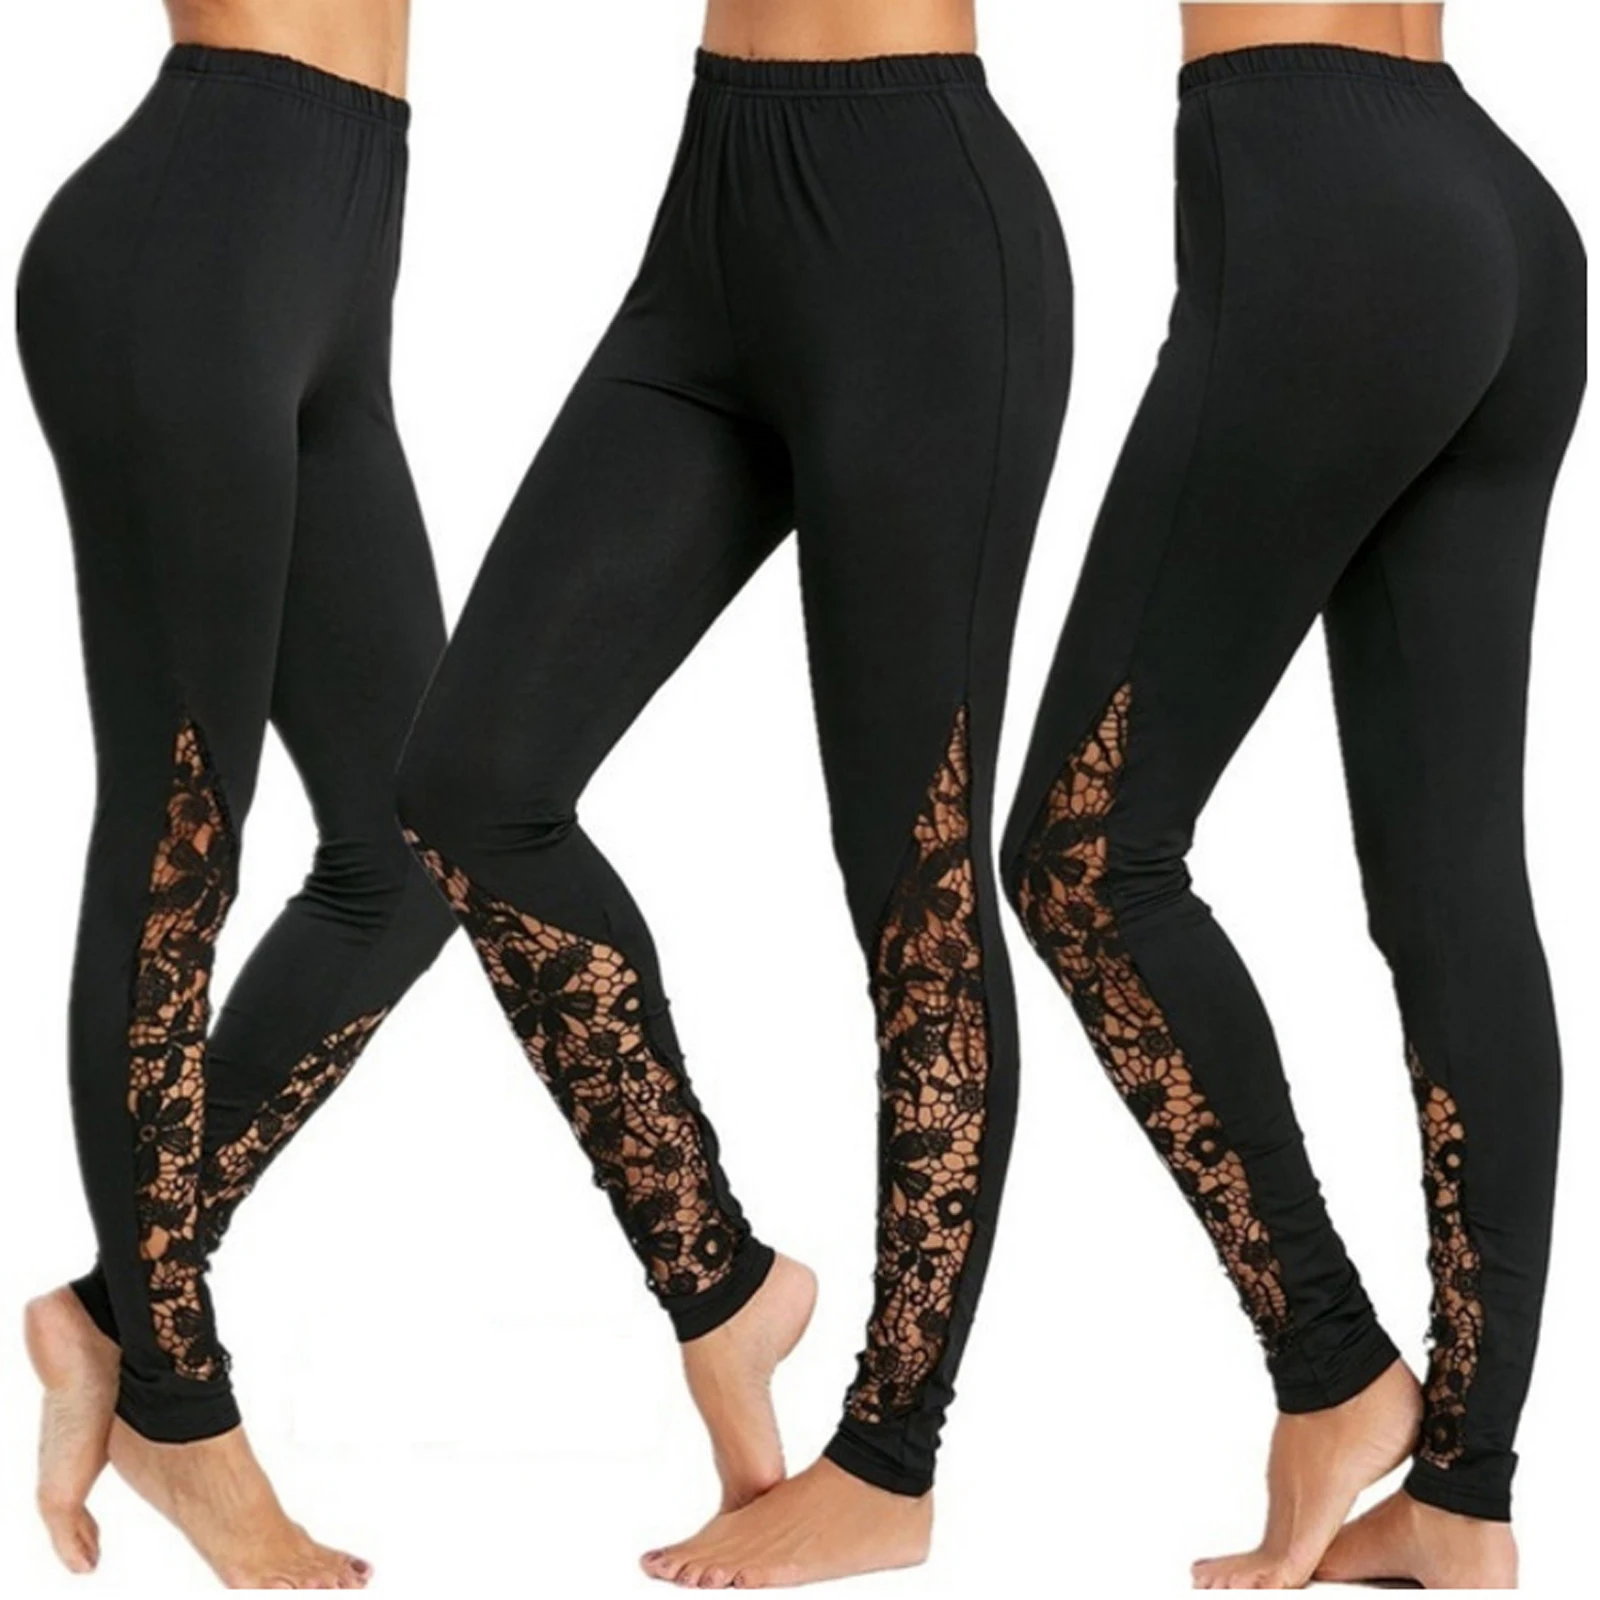 Leggings Women's High Waist Floral Lace Side Panel Cut Out Black Pants One Piece Trousers Plus Size Outwears